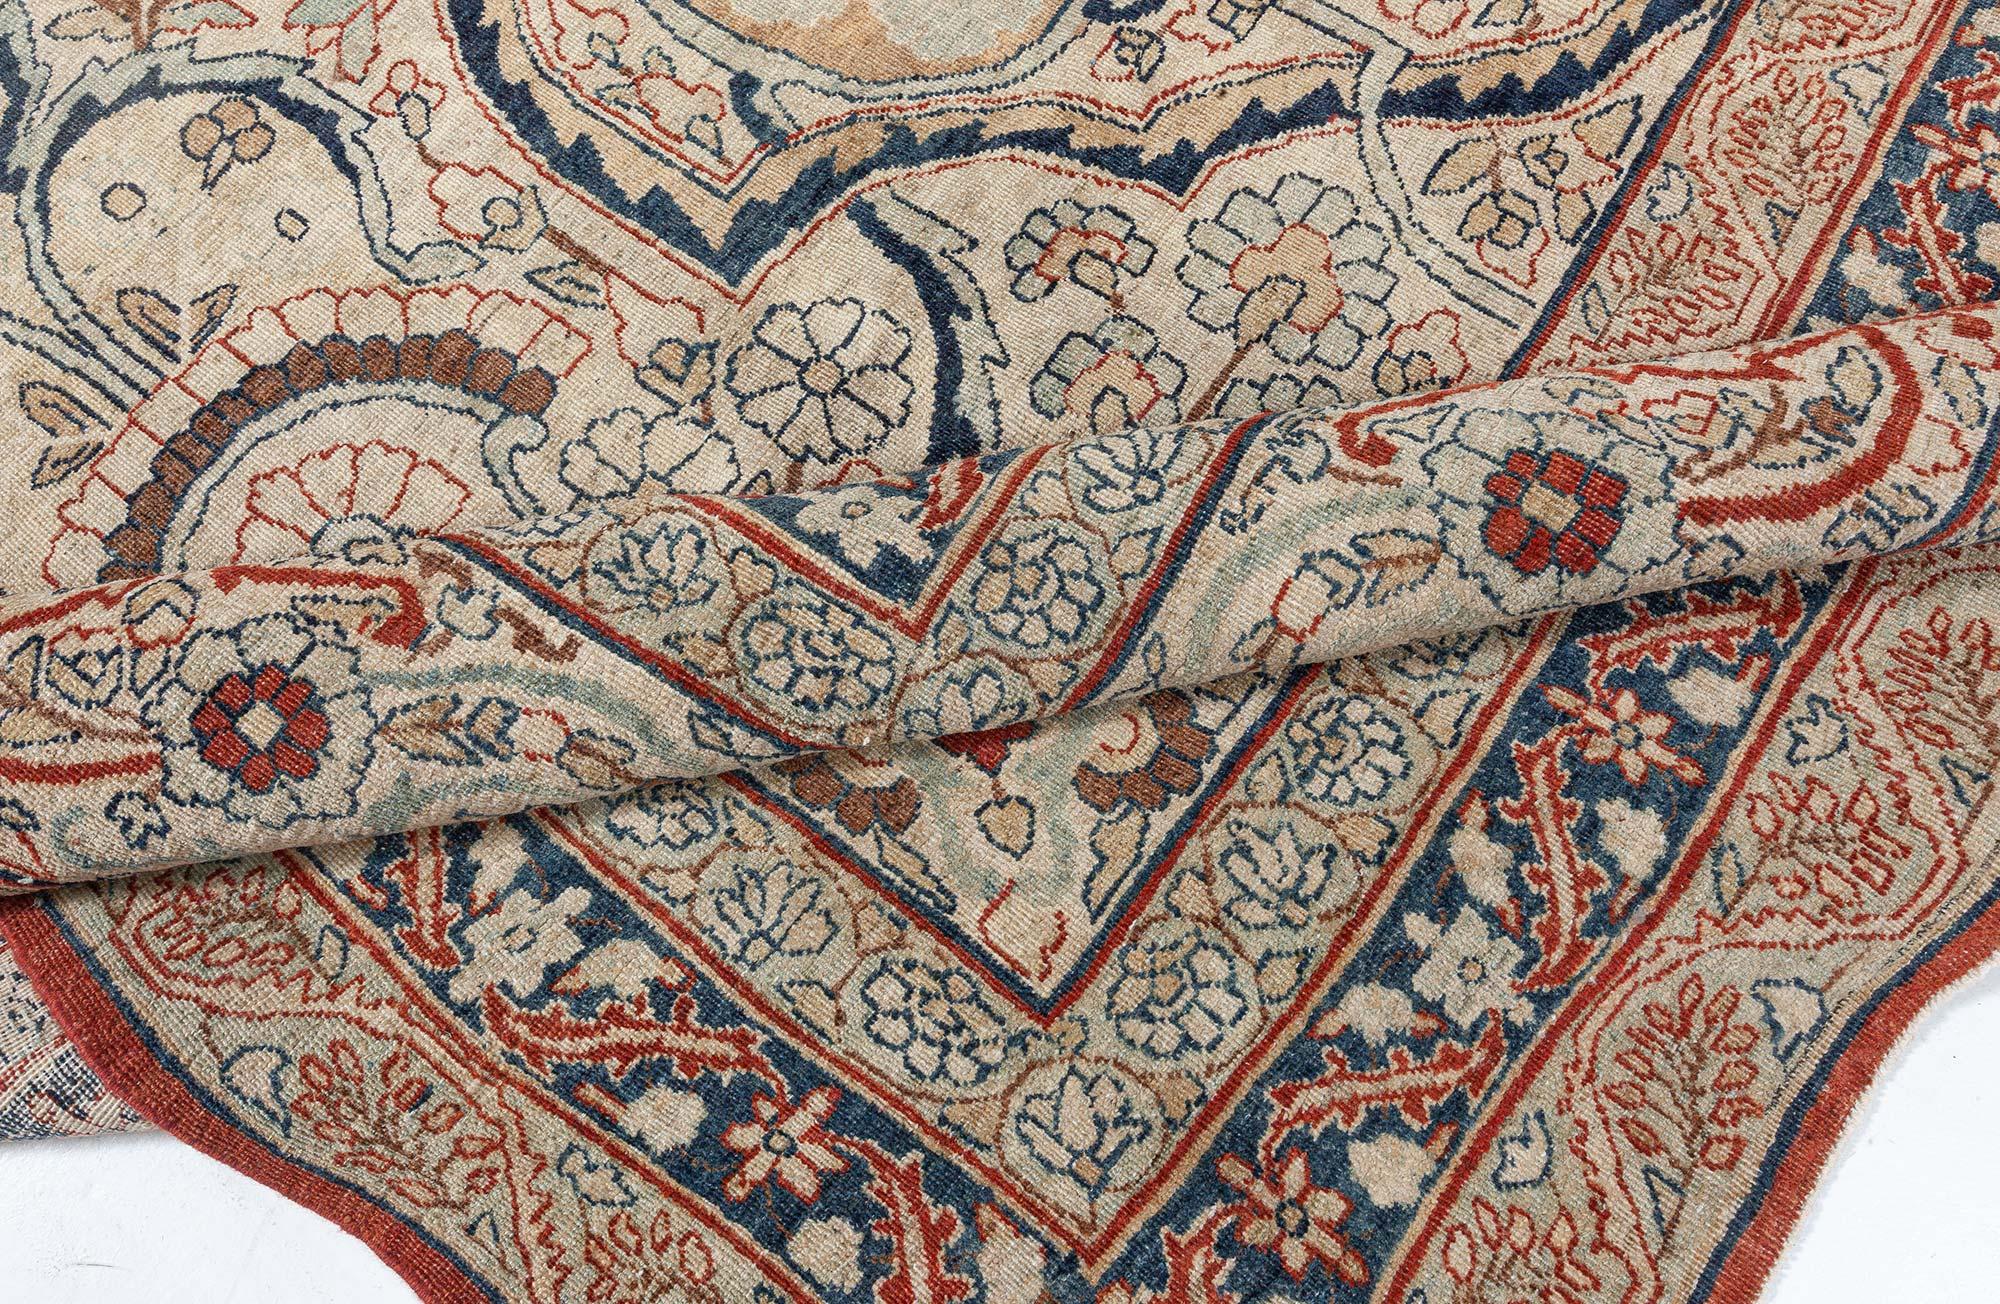 Authentic 19th century Persian Kirman carpet
Size: 12'9